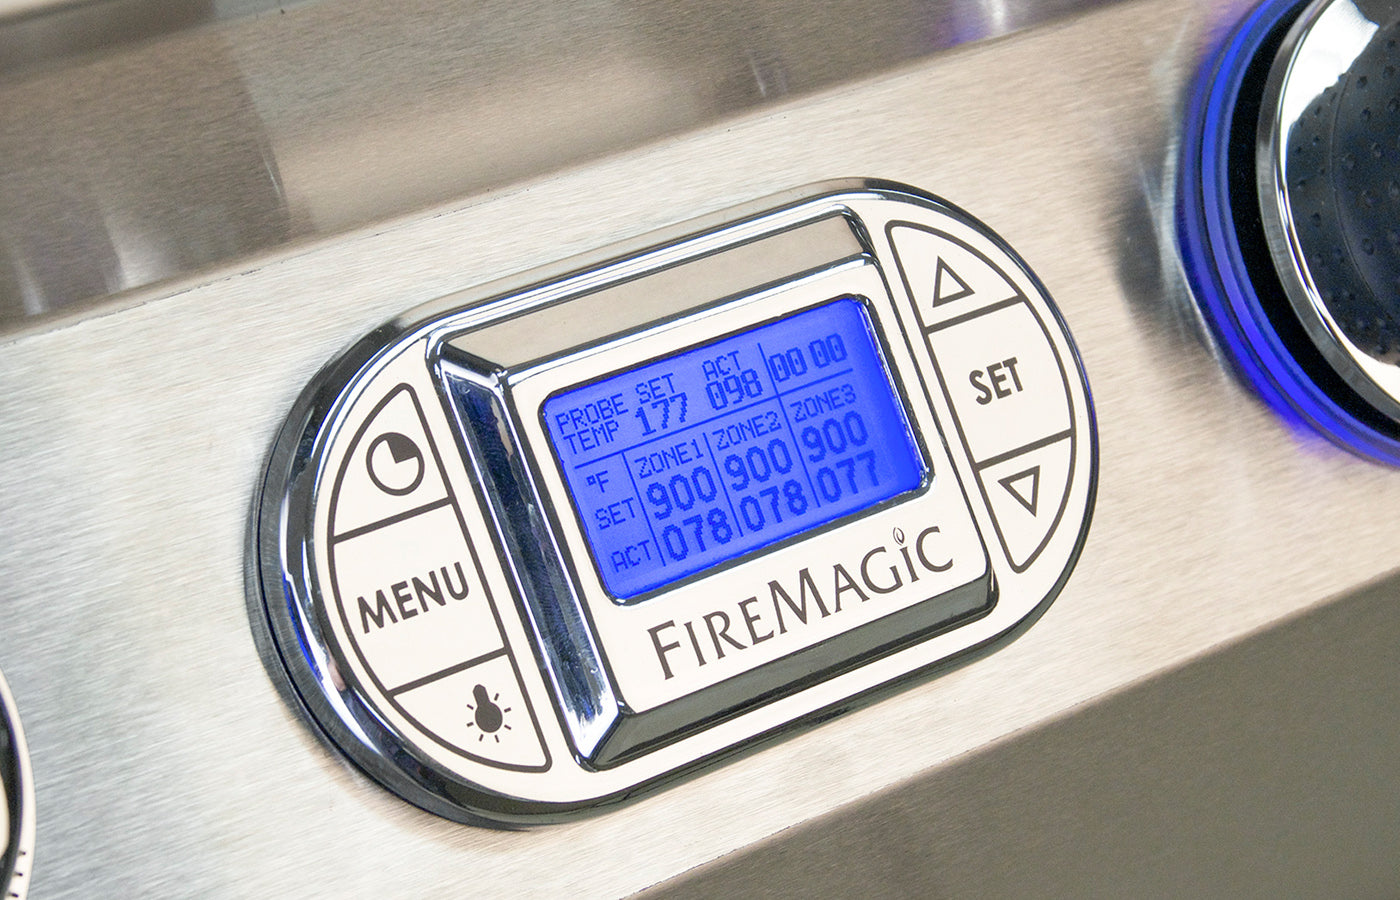 fire-magic-48-e1060s-freestanding-gas-grill-w-side-burner-rotiss-digi-display 8